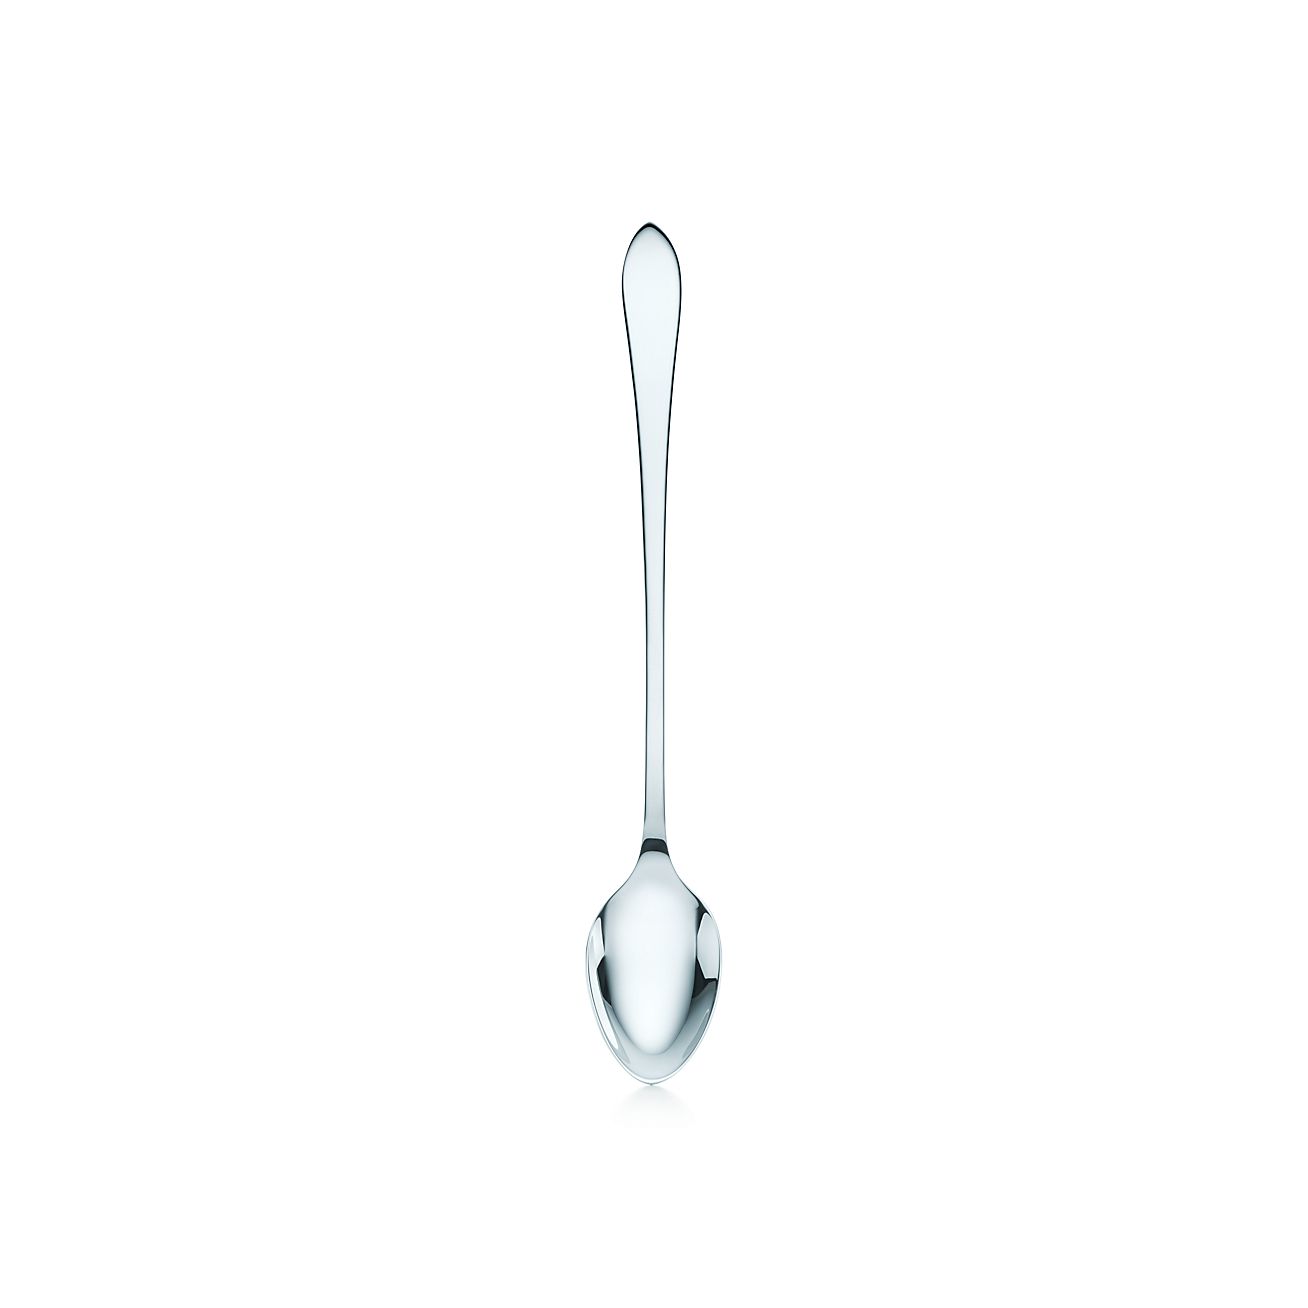 silver baby spoon tiffany